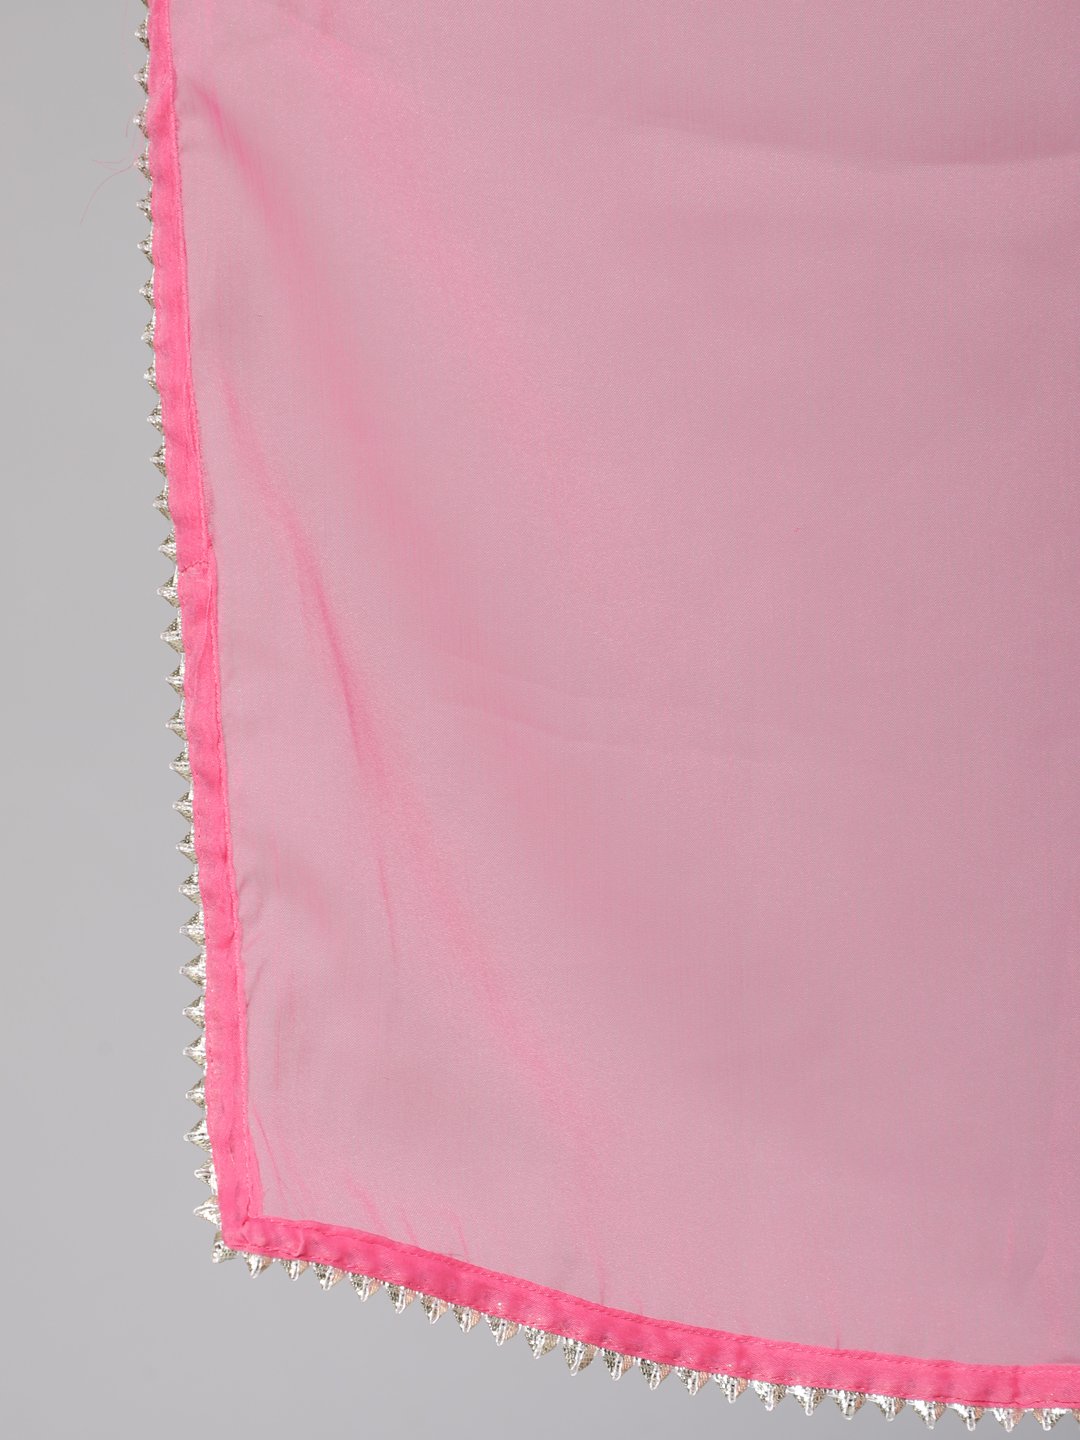 Ishin Women's Silk Tie & Dye Zari Embroidered Anarkali Kurta Trouser Dupatta Set